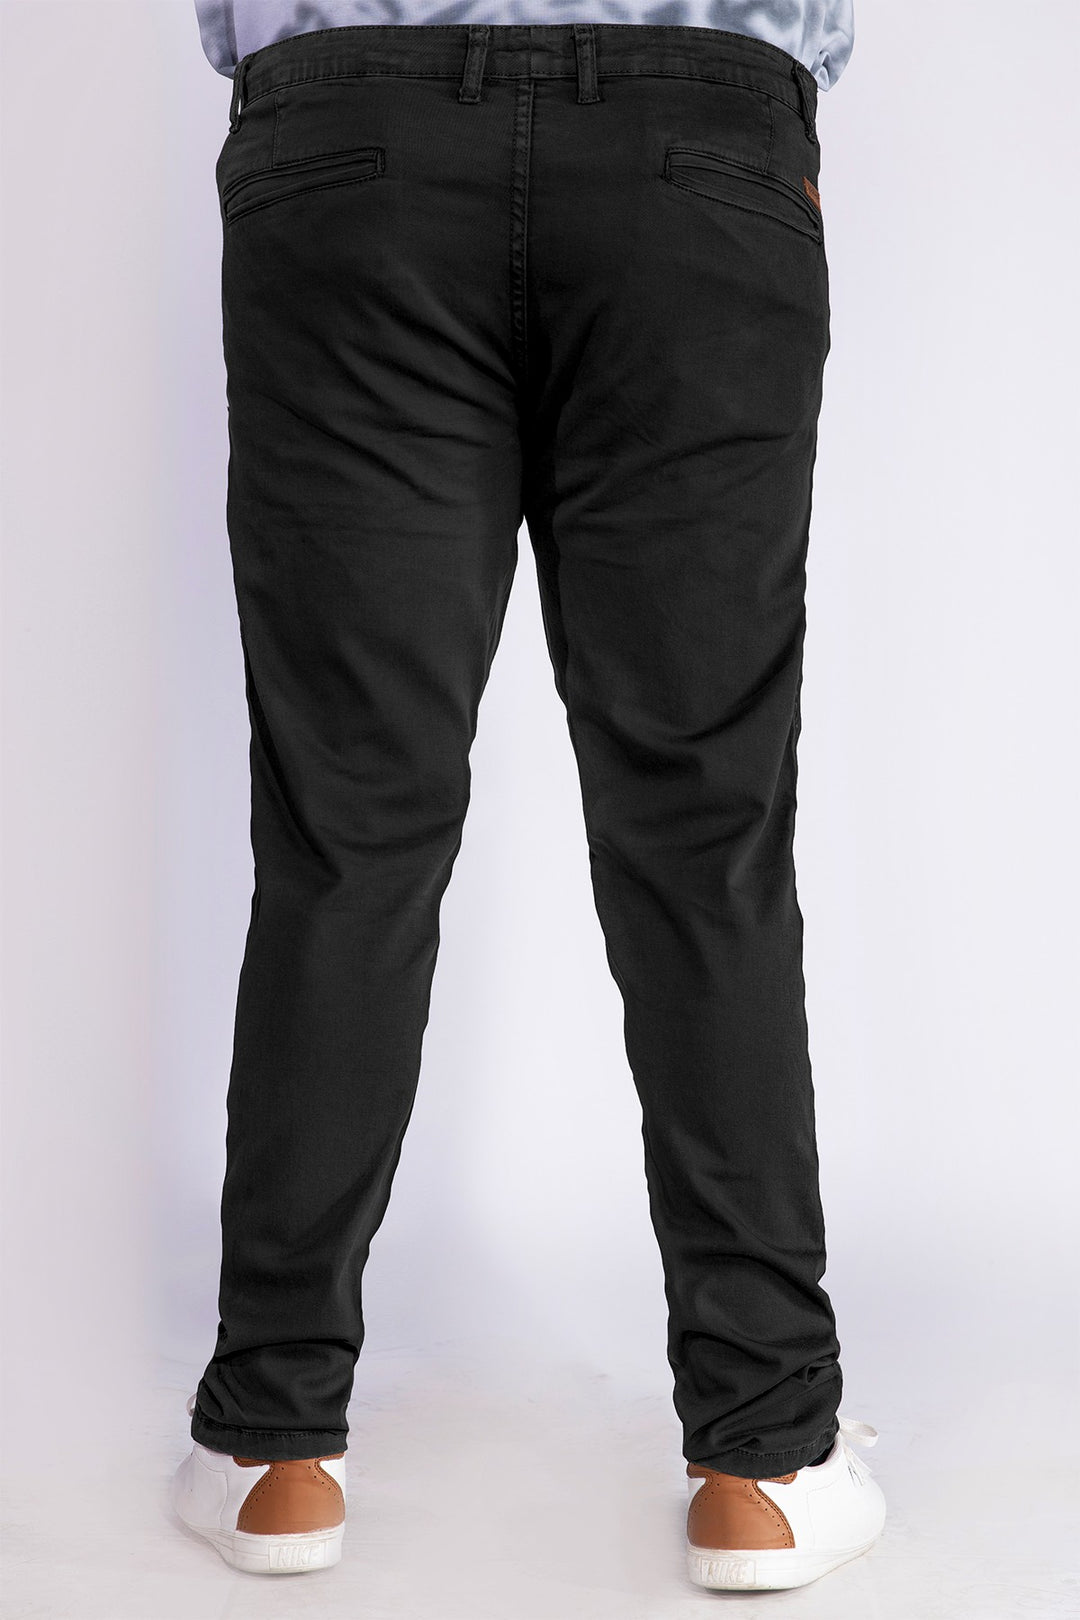 Slim Fit Black Stretchy Chinos (Plus size) - W21 - MC0006P